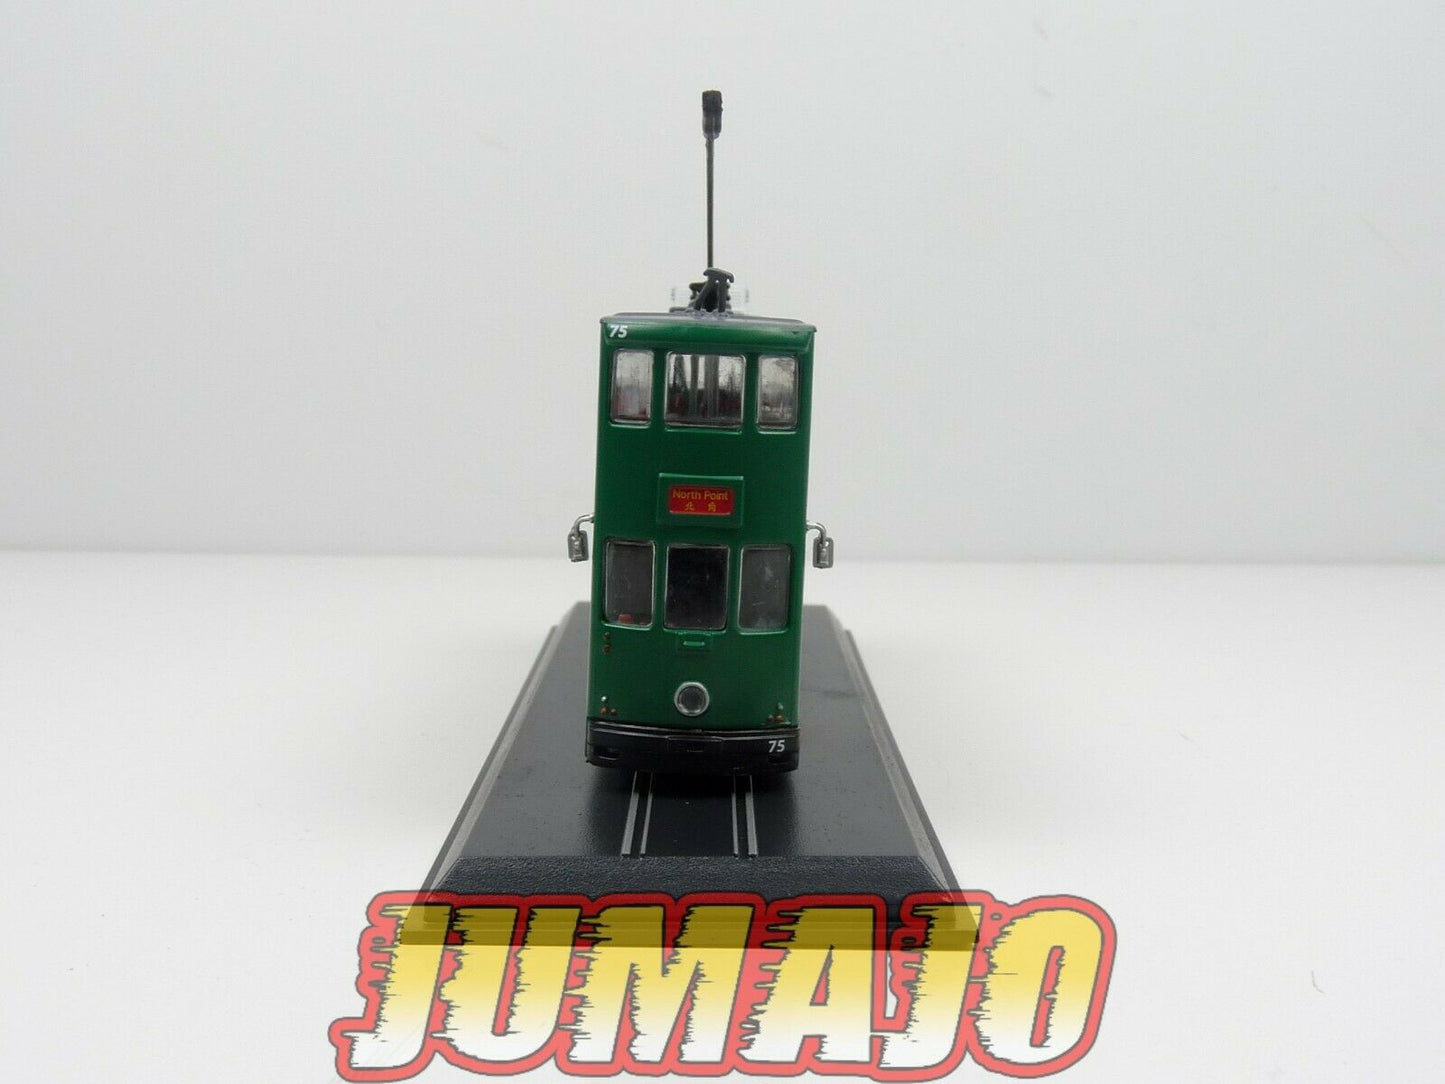 MEA84 LOCOMOTIVE tram 1/87 HO : 6th Generation (HKT) - 1986 North Point 75